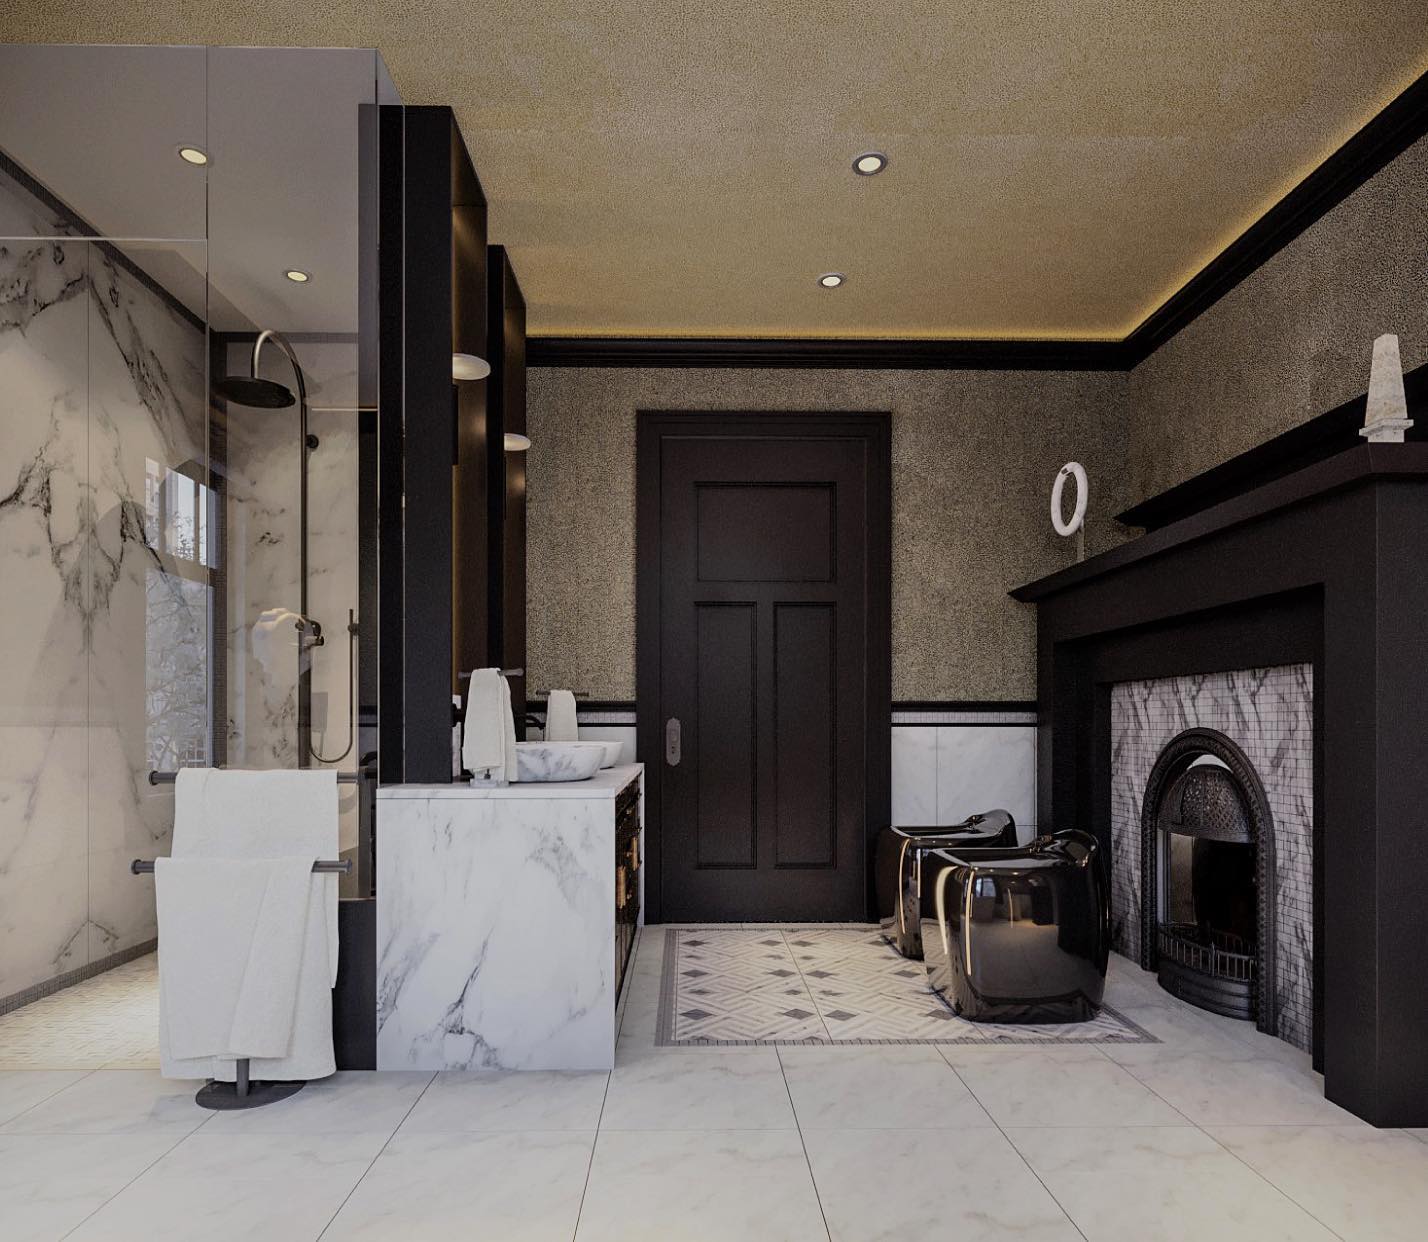 Renderings for a primary bathroom 
.
.
.
#conceptdesign #renderings #bathroominspo #primarybathroom #bathroomdecor #mdg #meadedesigngroup #ivanmeade #interiors #interiordesign #yyjdesign #victoriabc #luxurydesign #luxurylifestyle #luxuryhome #interiordesignyyj #elegance #interiordesignyyj